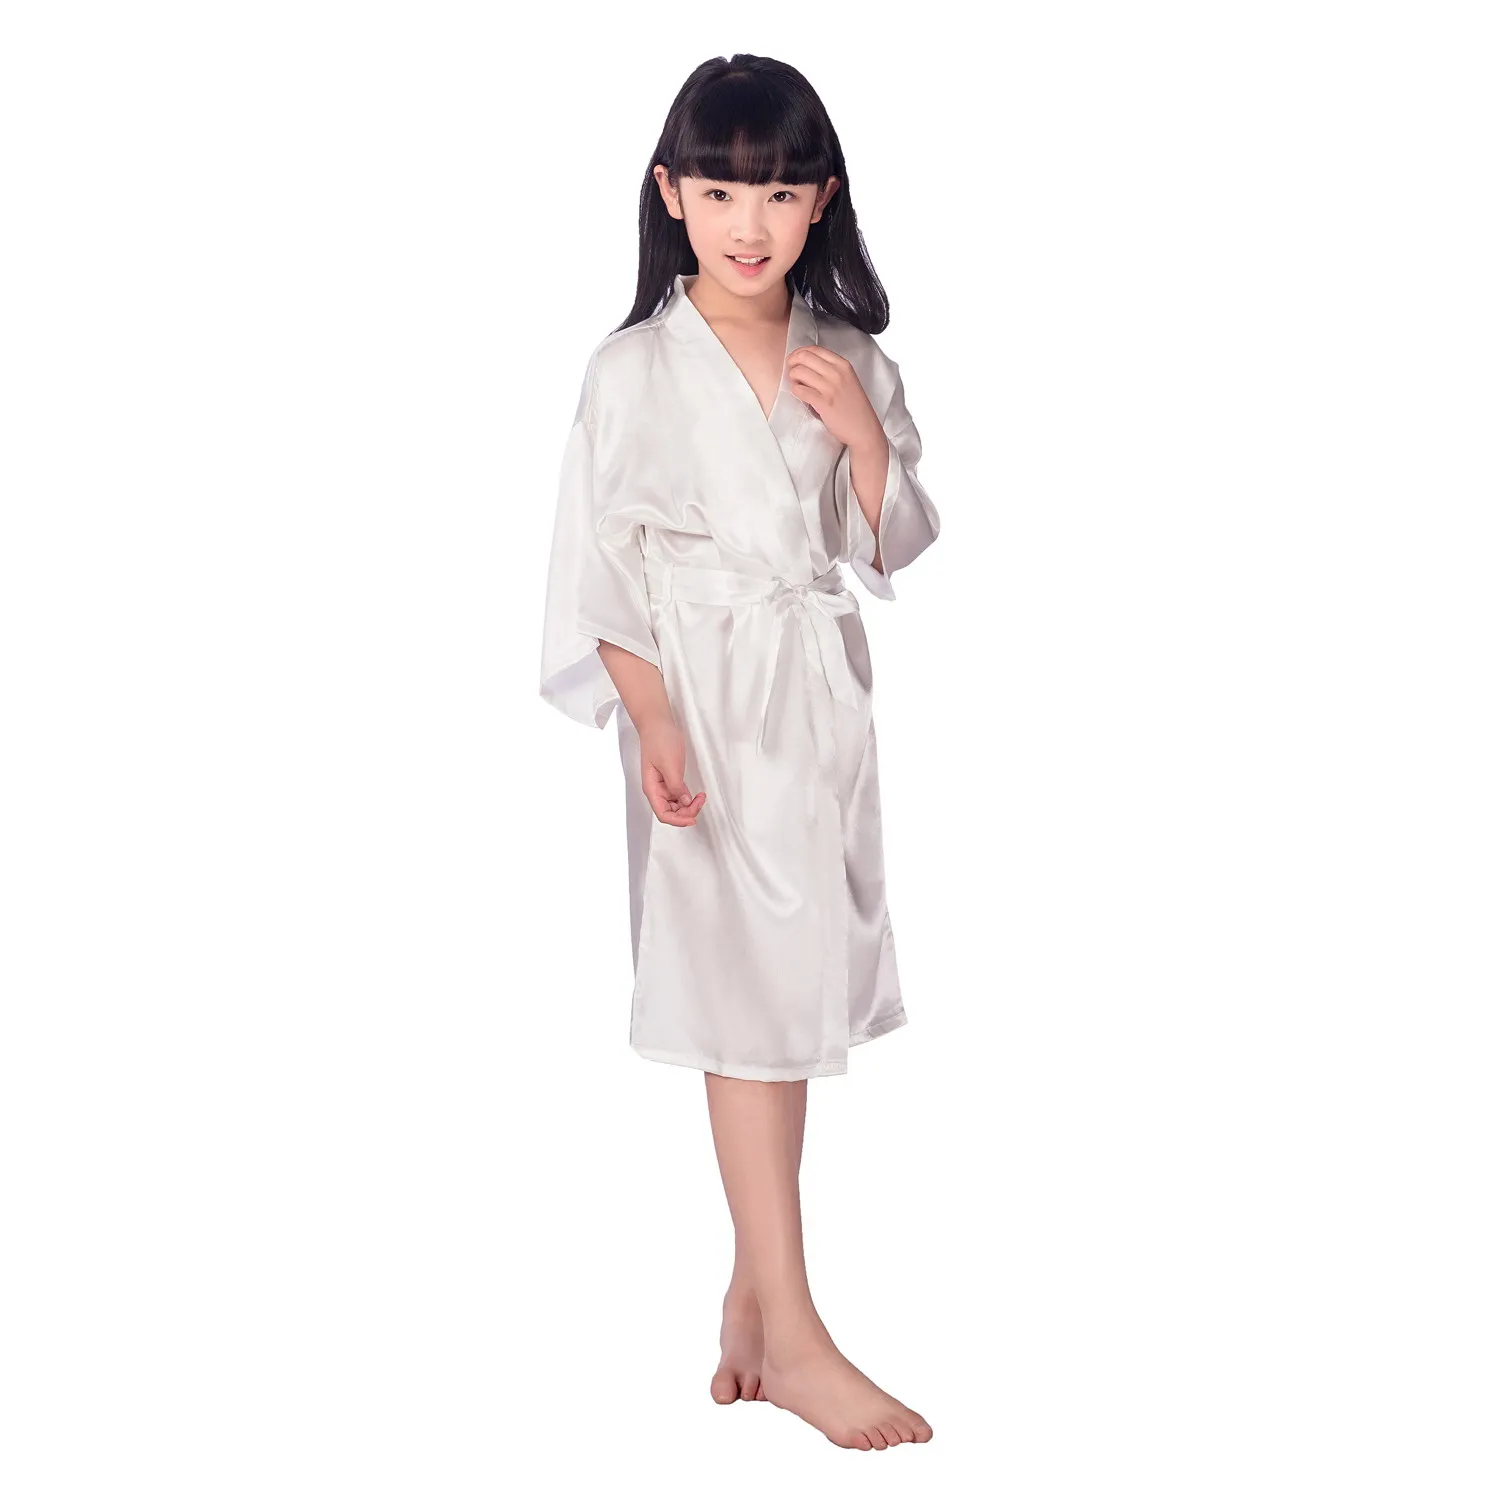 2017 zomer meisjes solide rayon zijden gewaad nachtkleding lingerie nachthemd pyjama satijn kimono jurk PJ's badjas vrouwelijke jurk 6 stks / partij # 4027